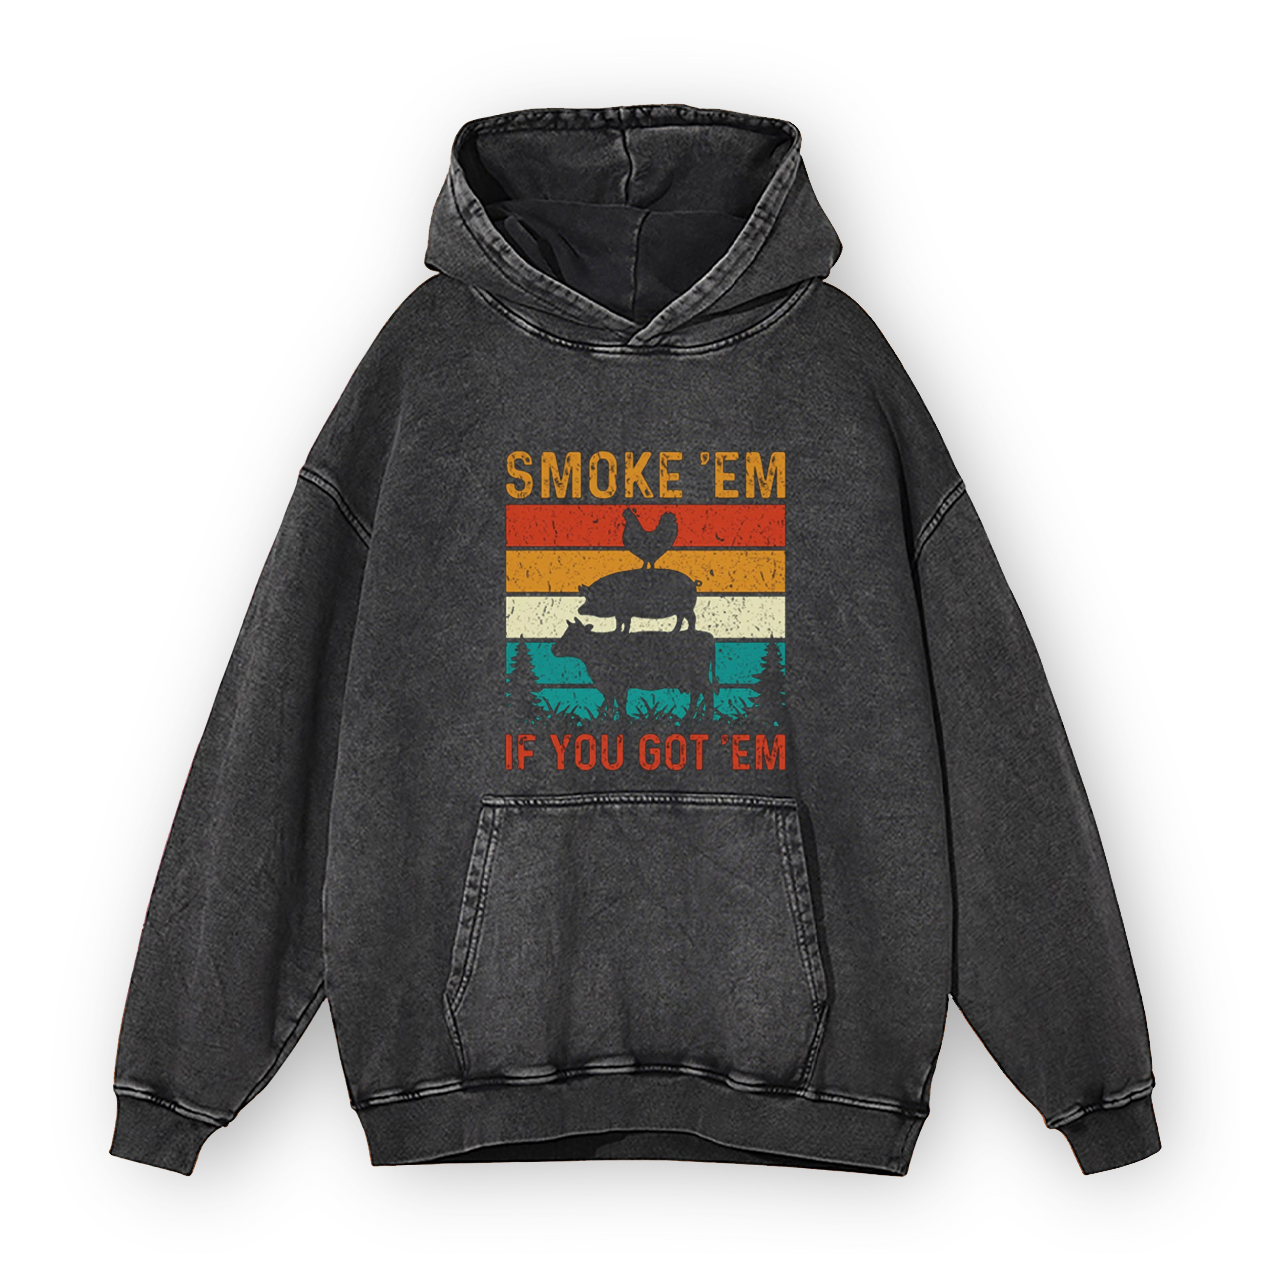 Smoke ‘EM If You Got ‘EM Garment-Dye Hoodies